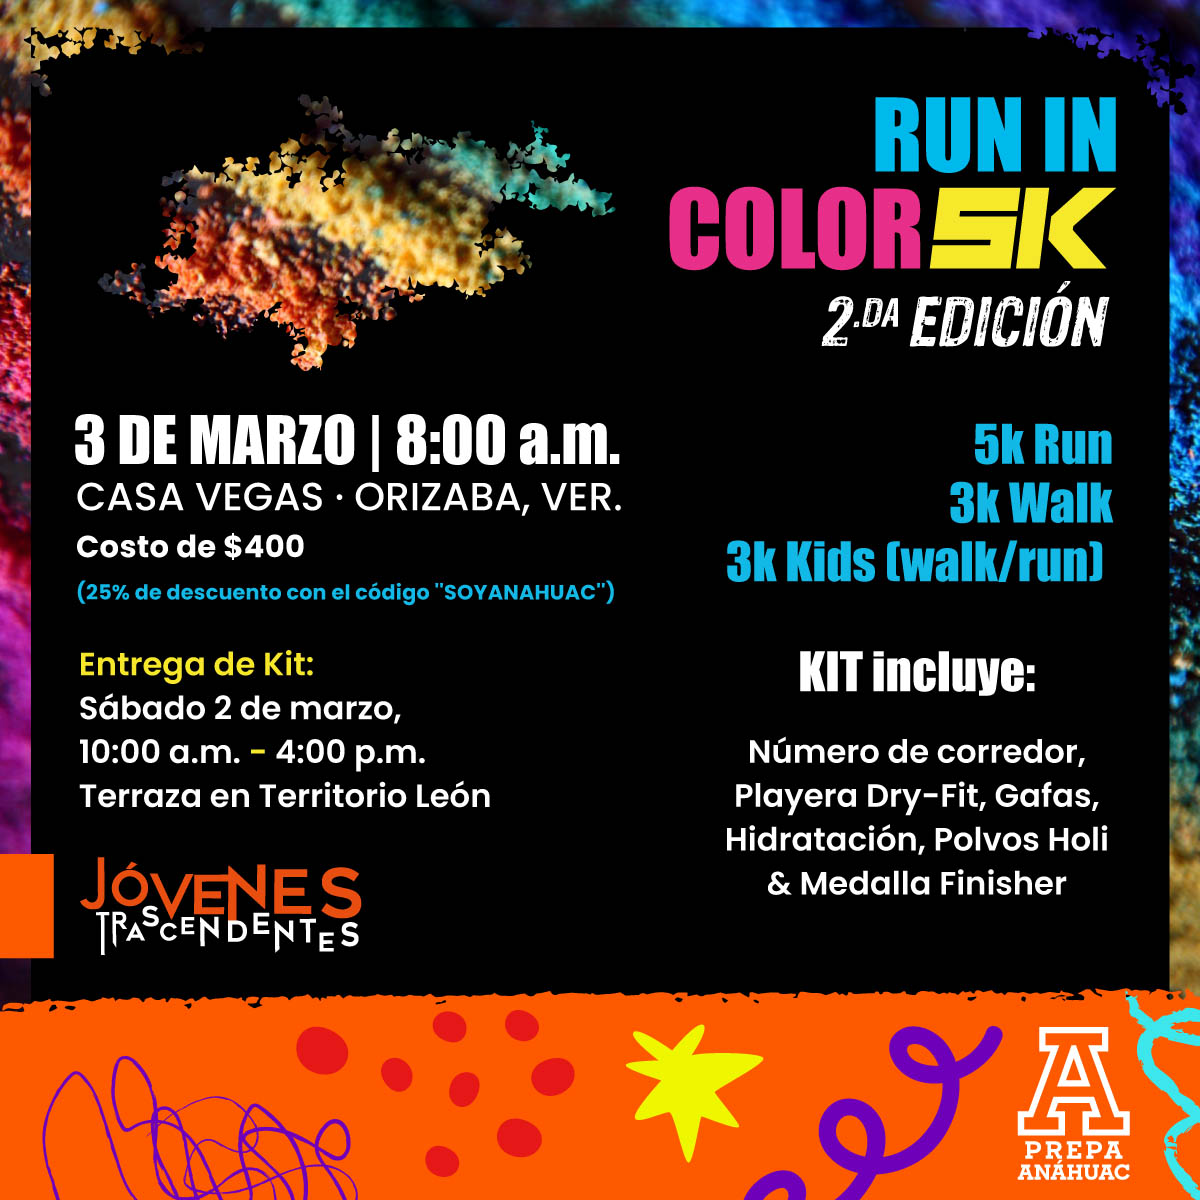 Run In Color 5K: Segunda Edición